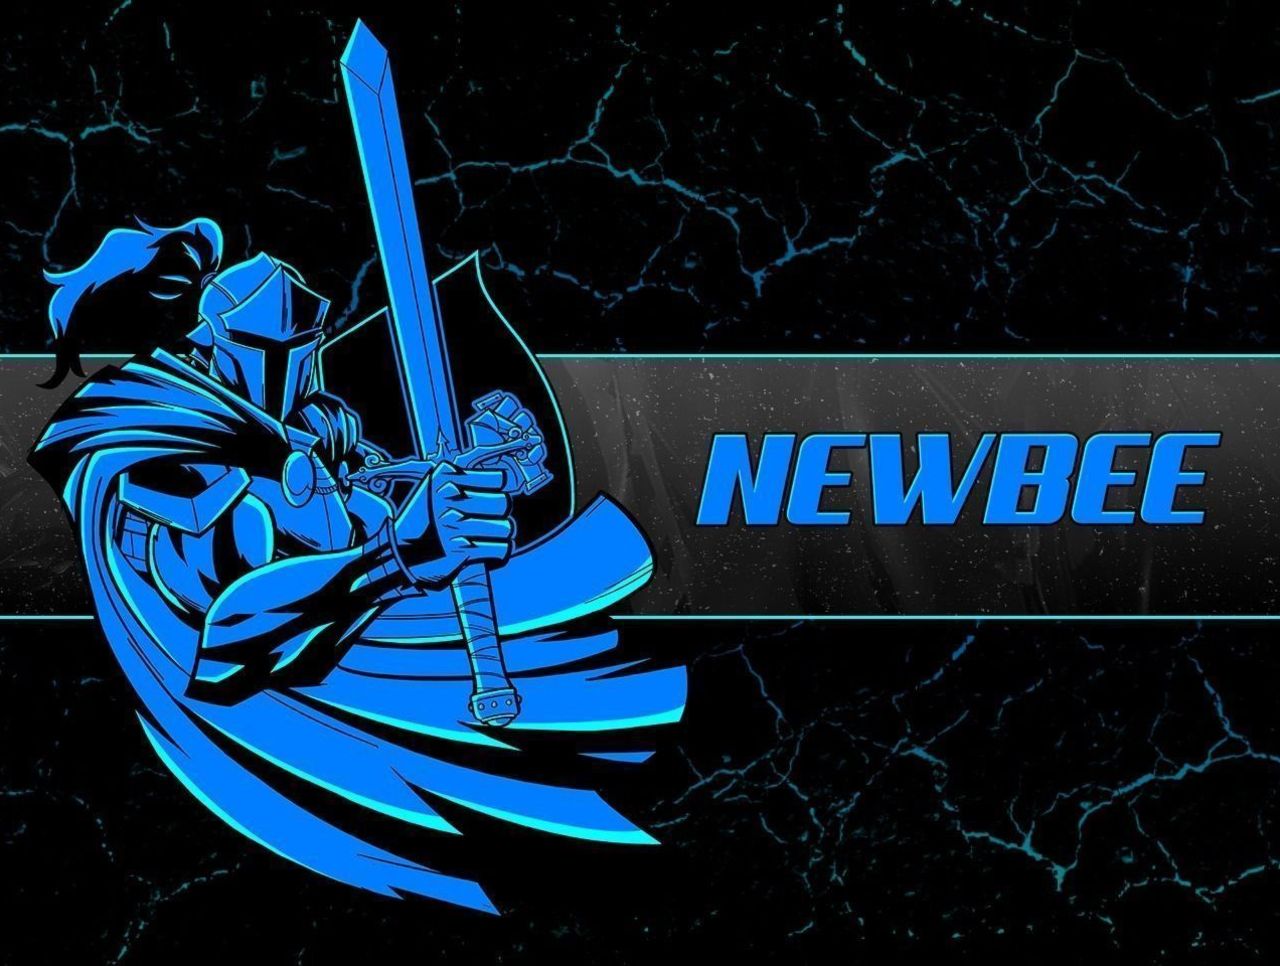 Newbee apresentam equipa mista de Dota 2